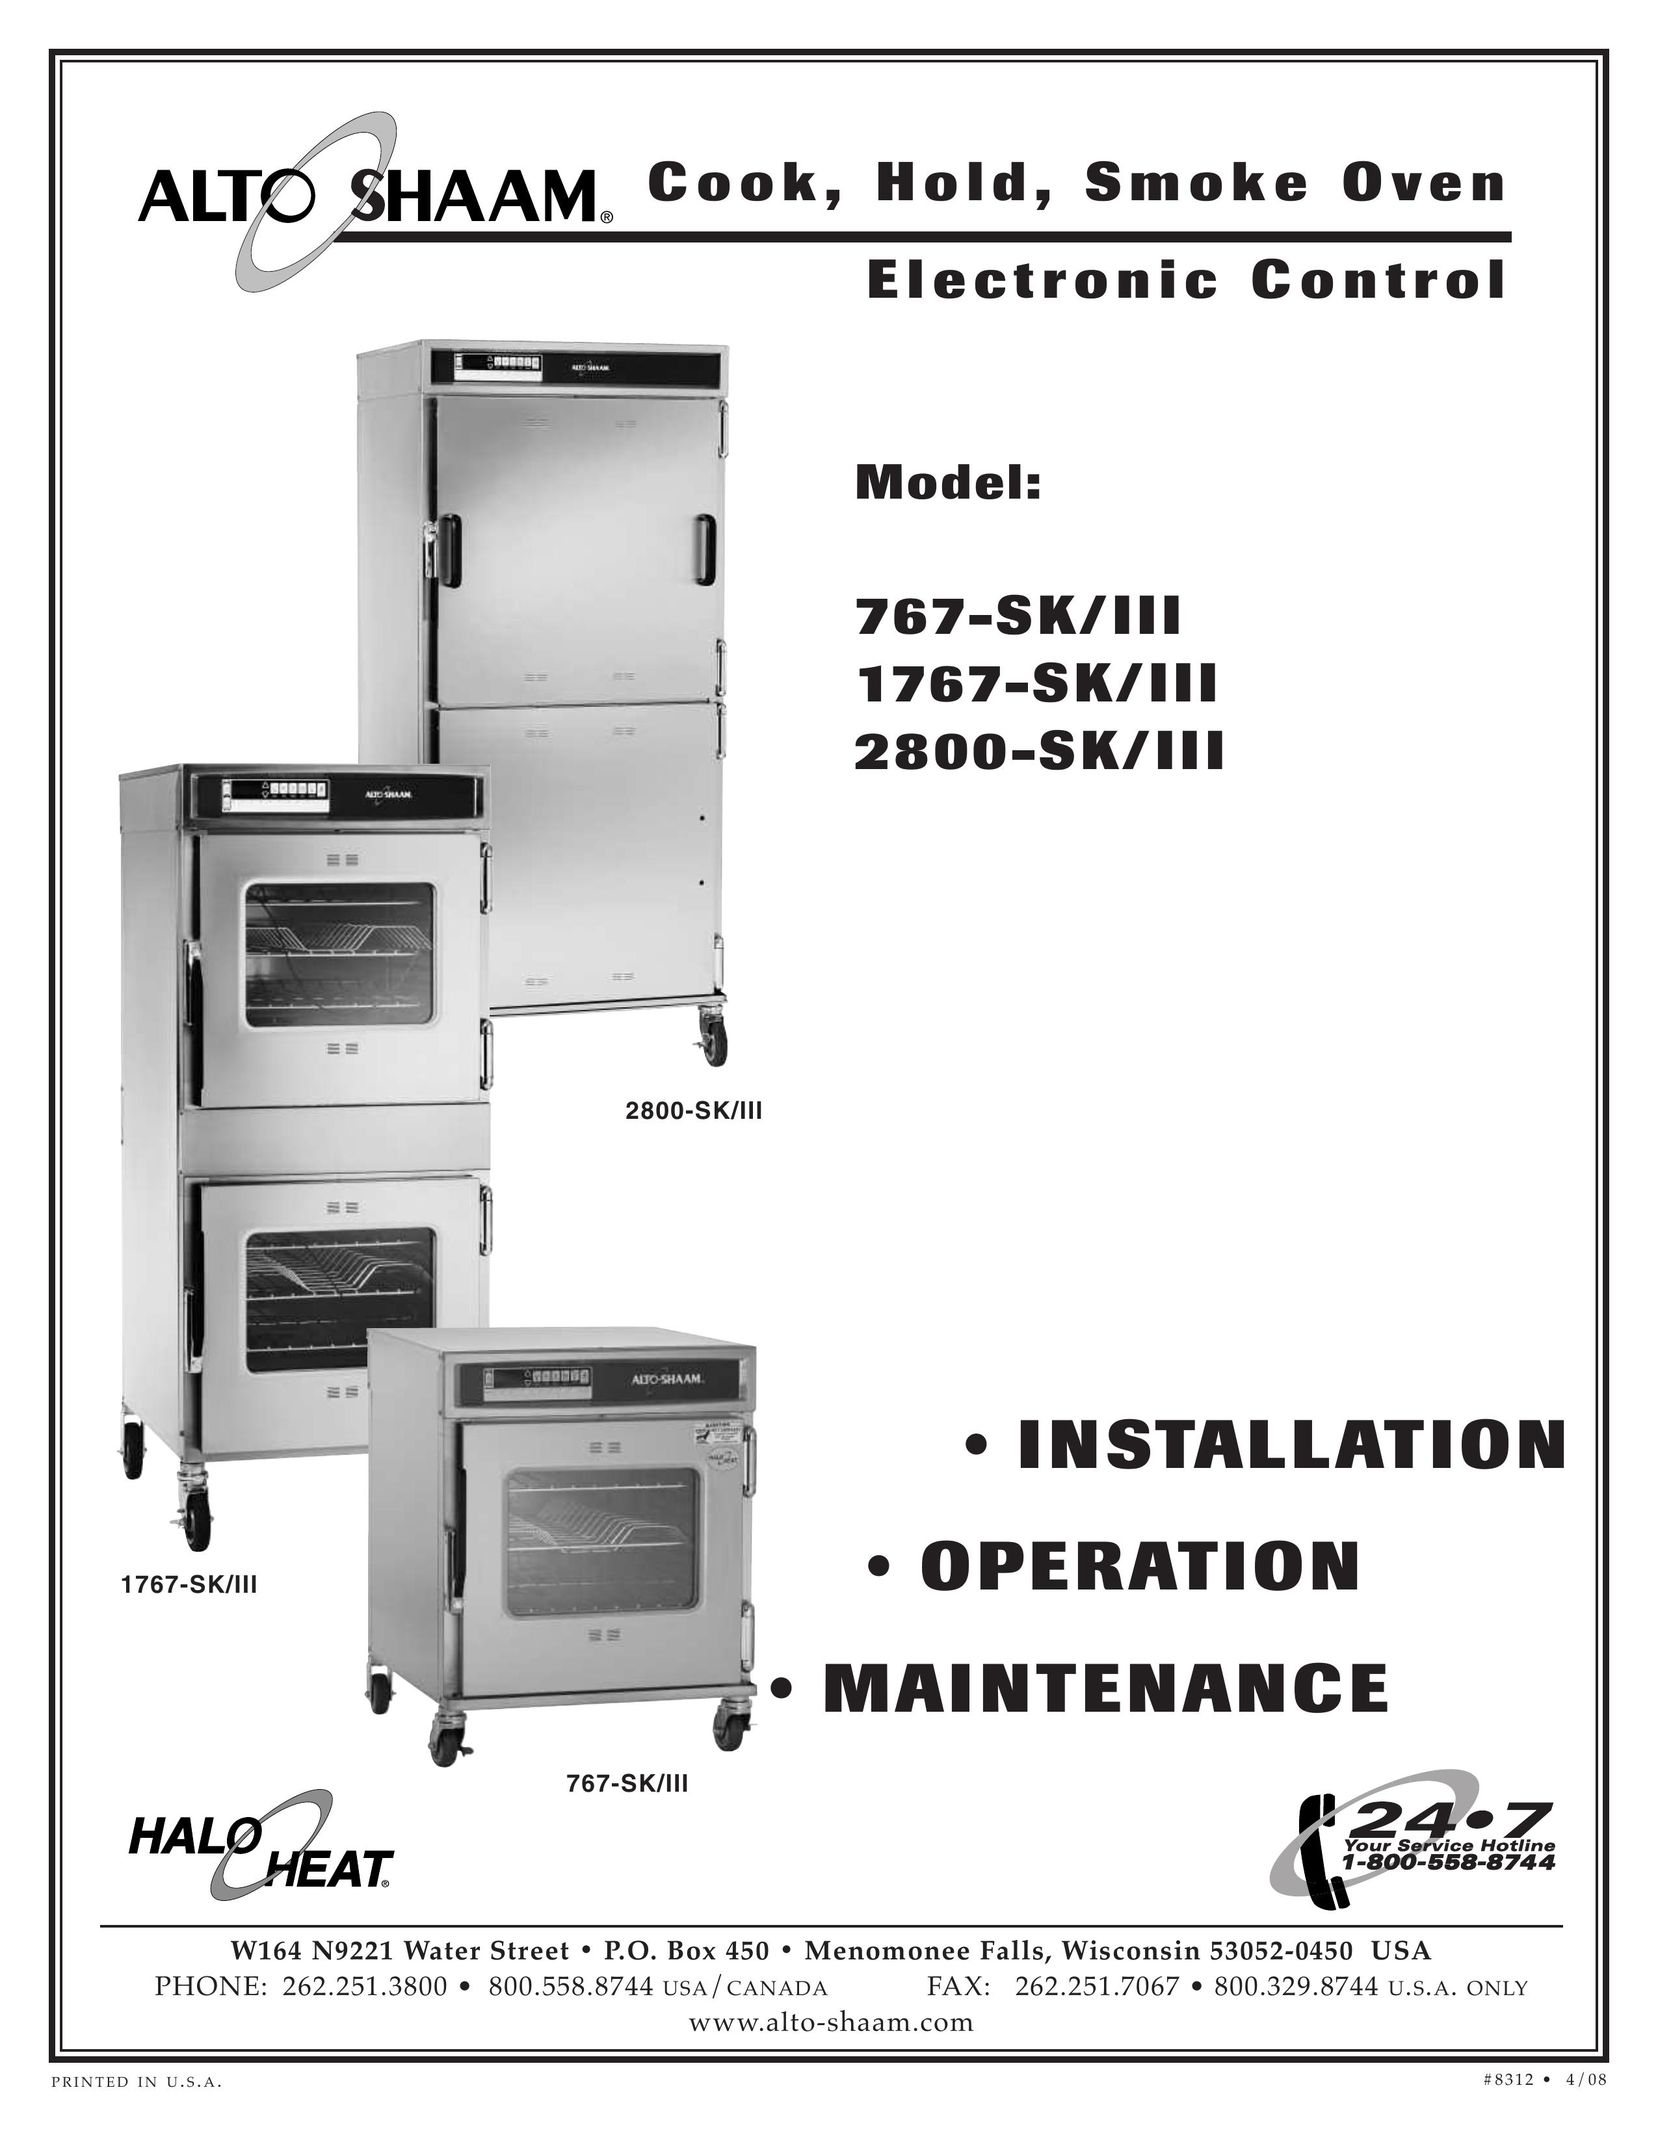 Alto-Shaam 2800-SK/III Microwave Oven User Manual